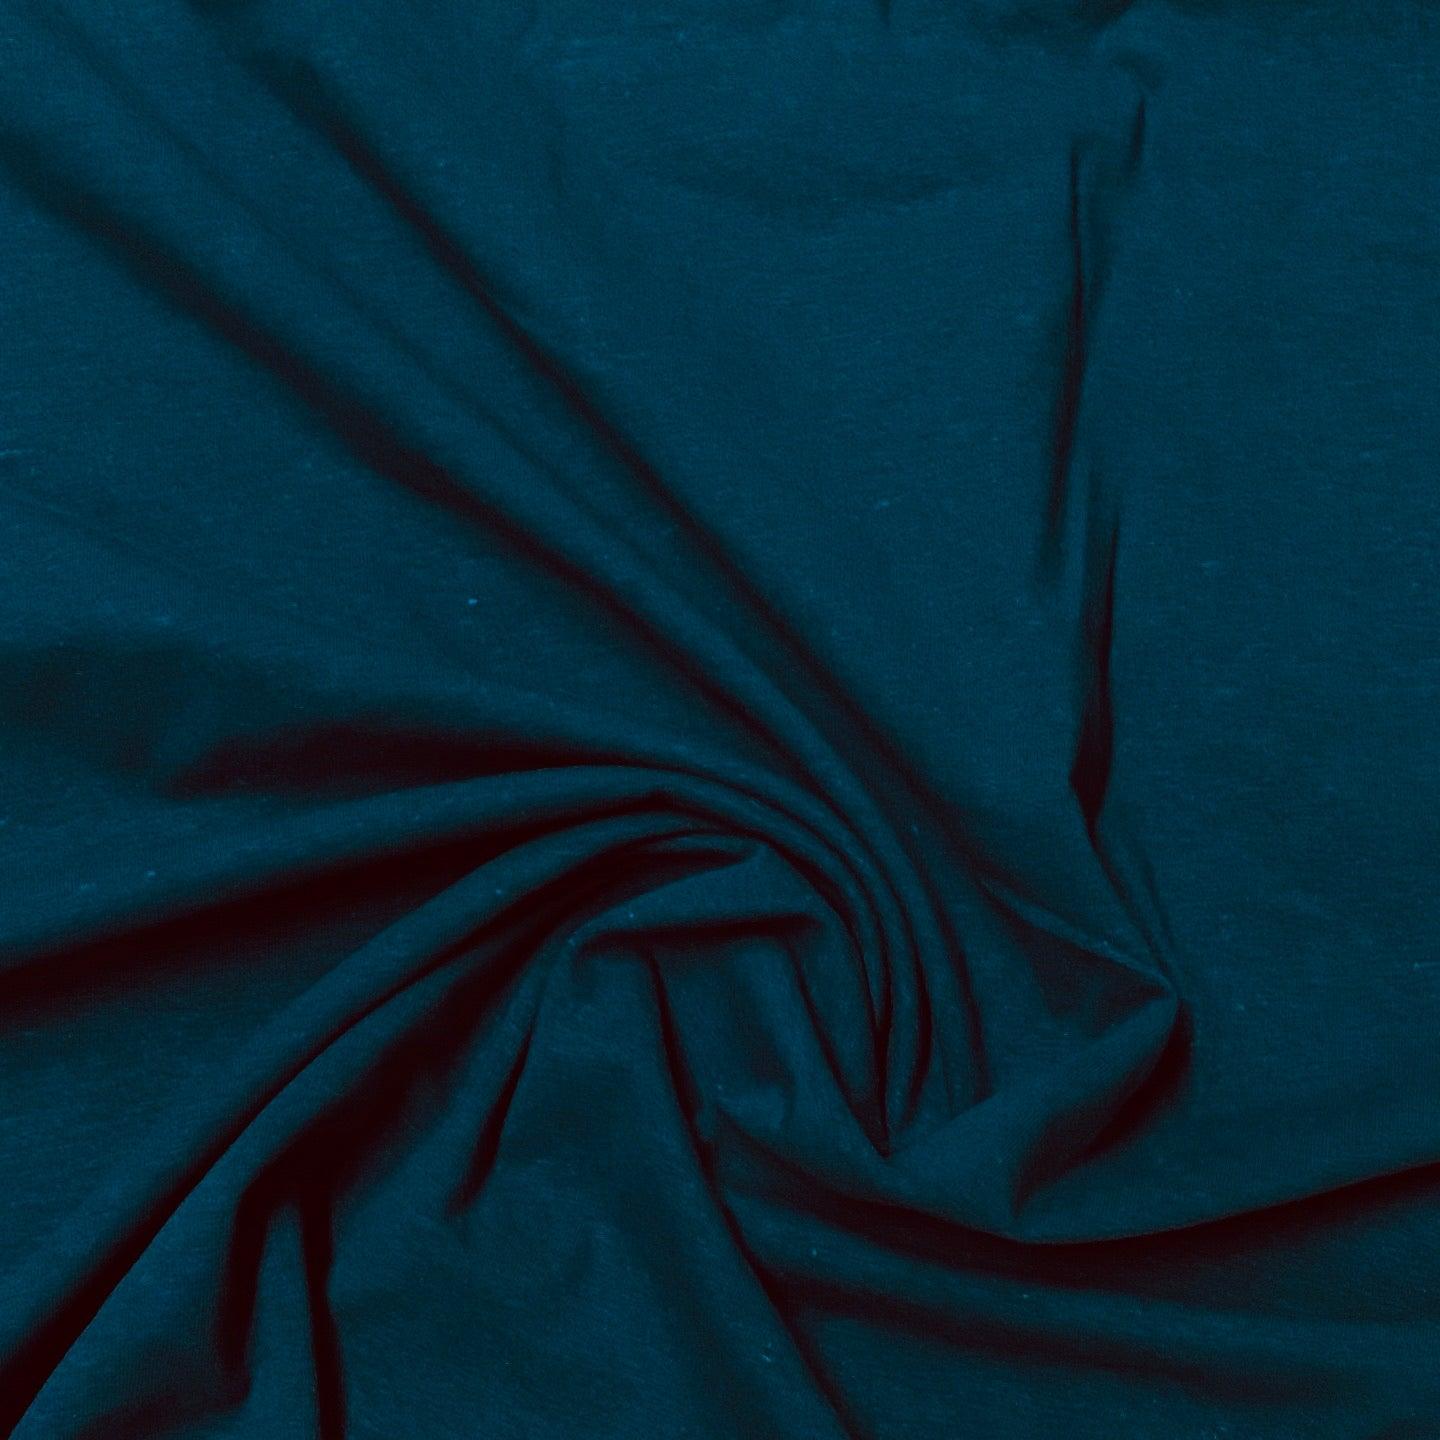 Moroccan Hemp Stretch Jersey Fabric - 240 GSM -$13.70/yd, 15 yards - Nature's Fabrics